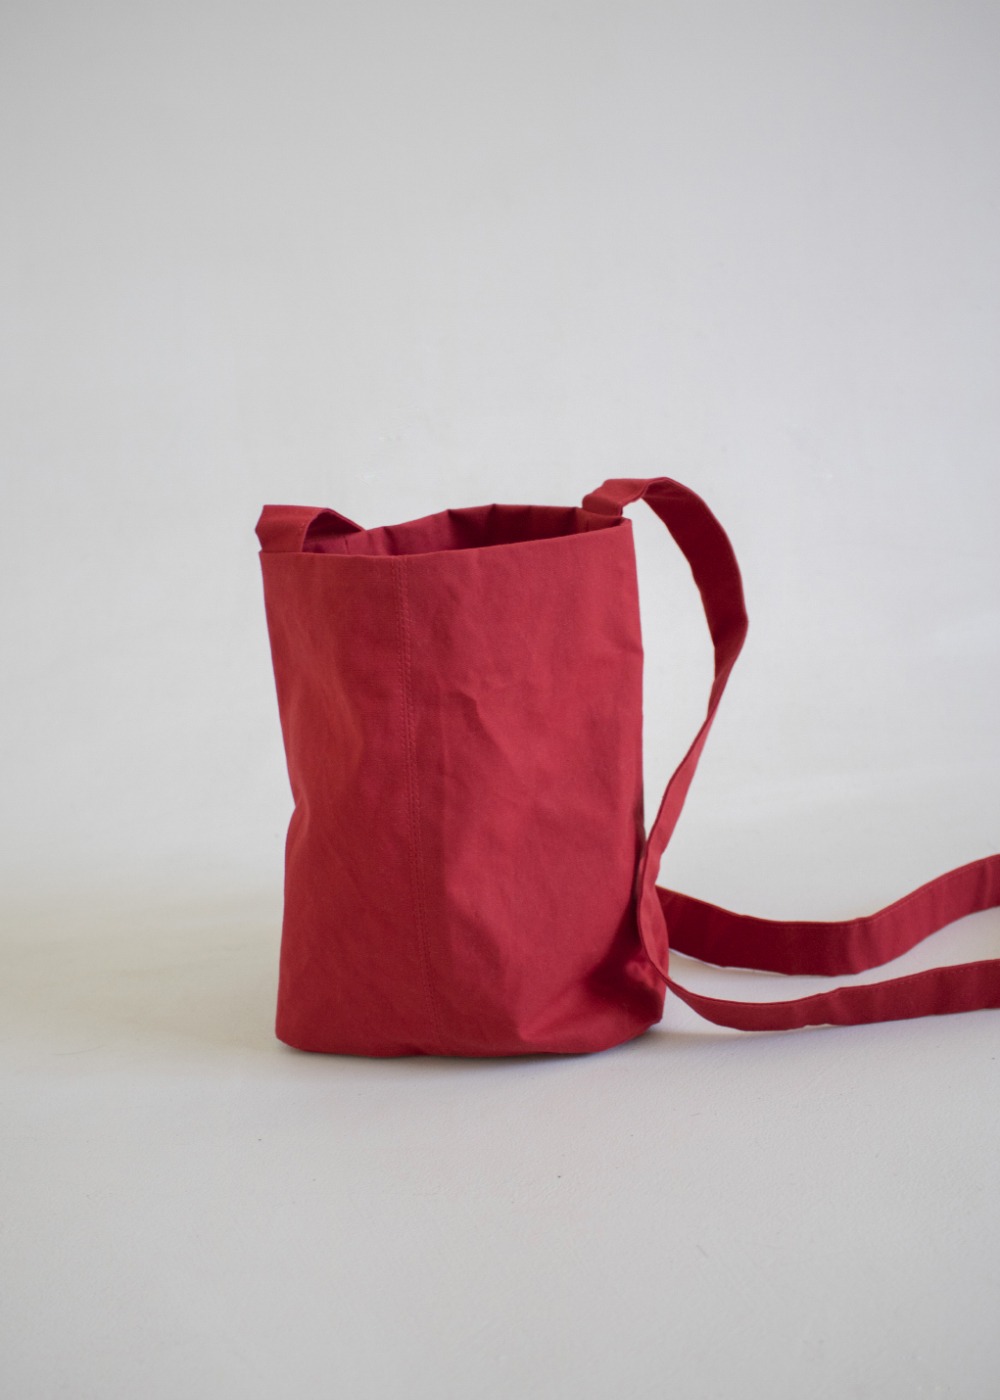 The Pint Bag - Scarlet